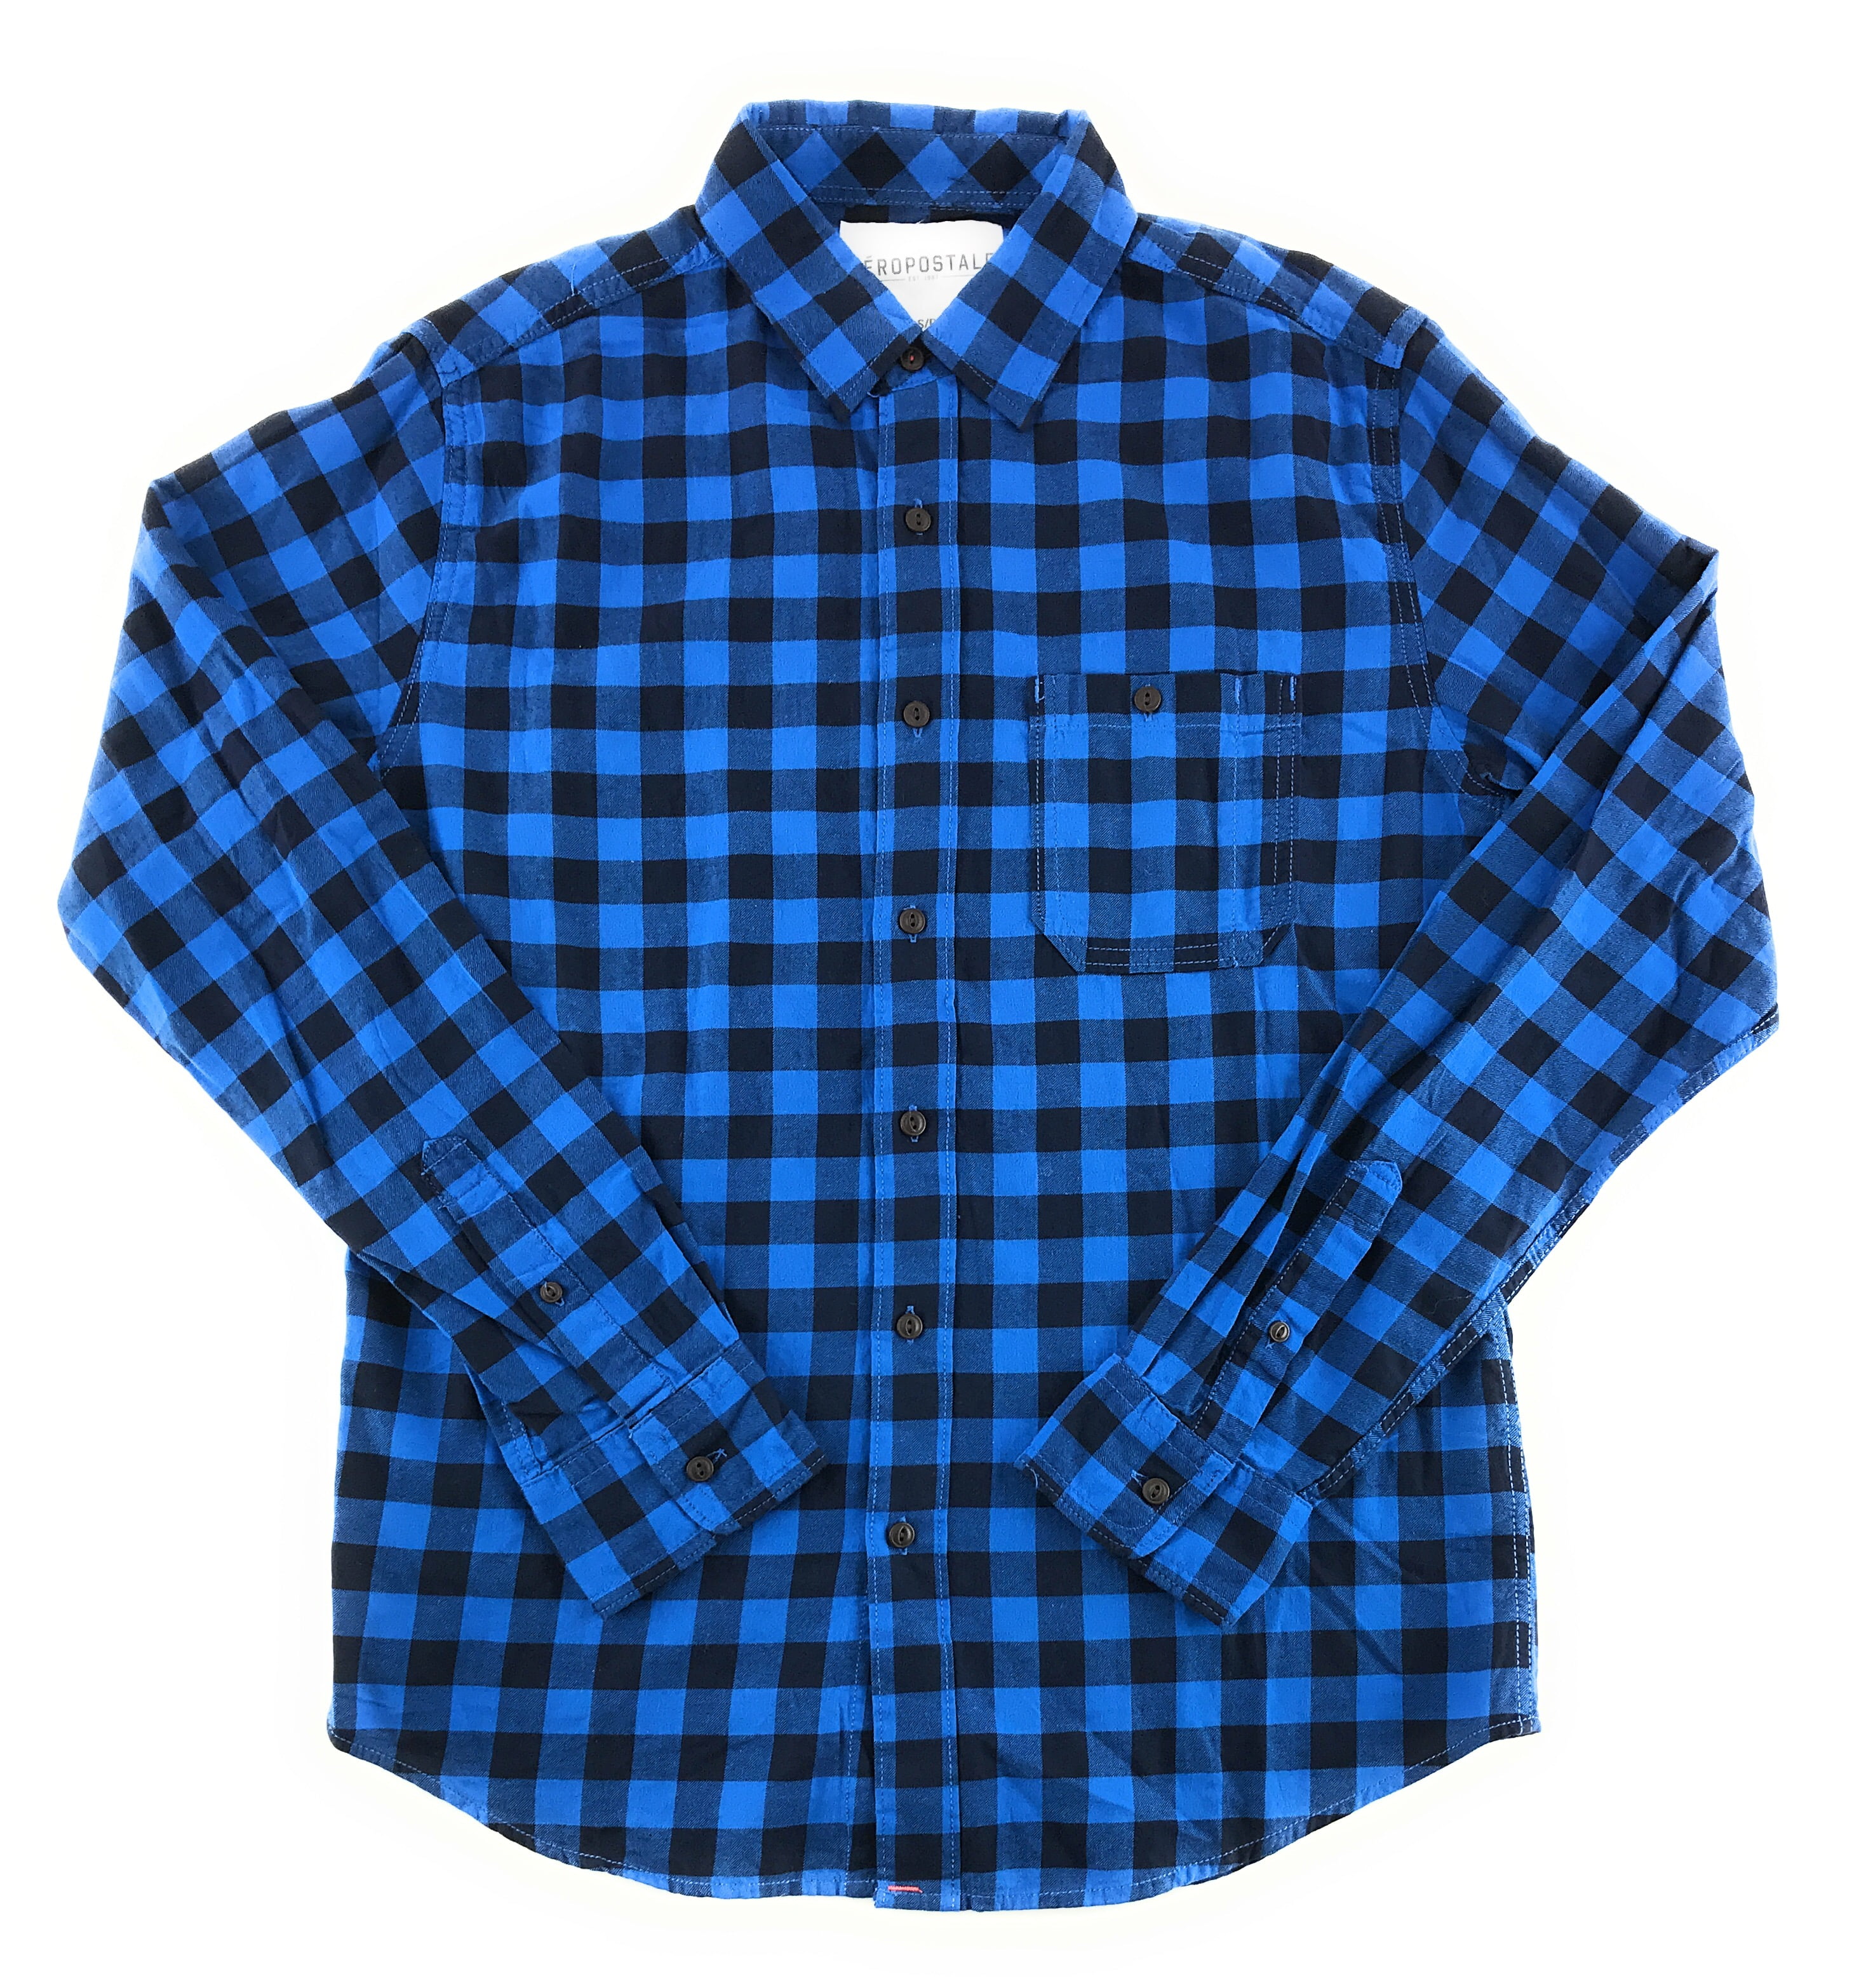 Aeropostale - Aeropostale Mens Flannel Long Sleeve Shirt - Walmart.com ...